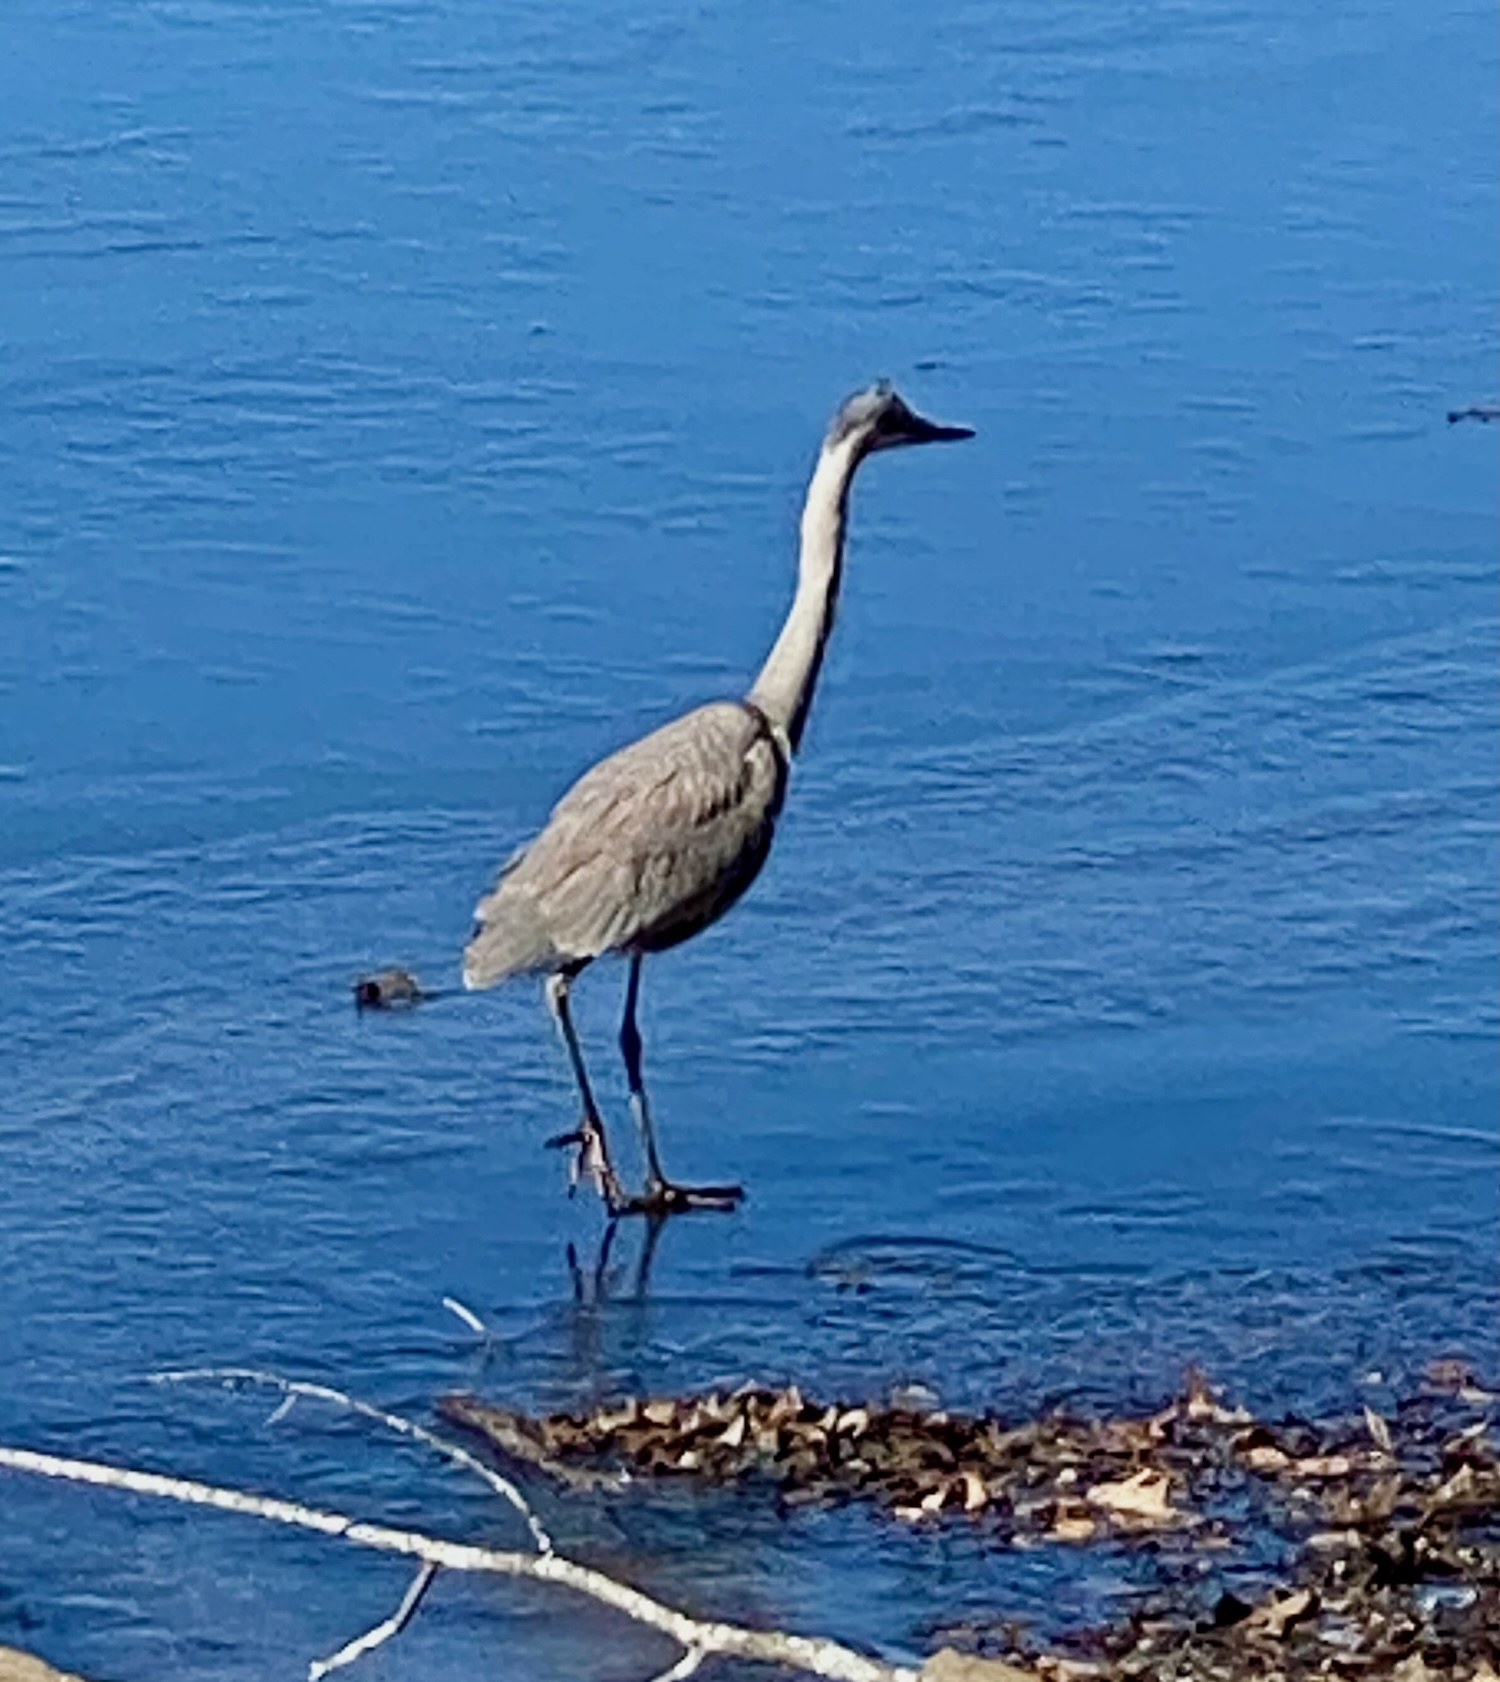 It's the weekend! Number 330, Blue Heron at Arlington Reservoir, Arlington, MA